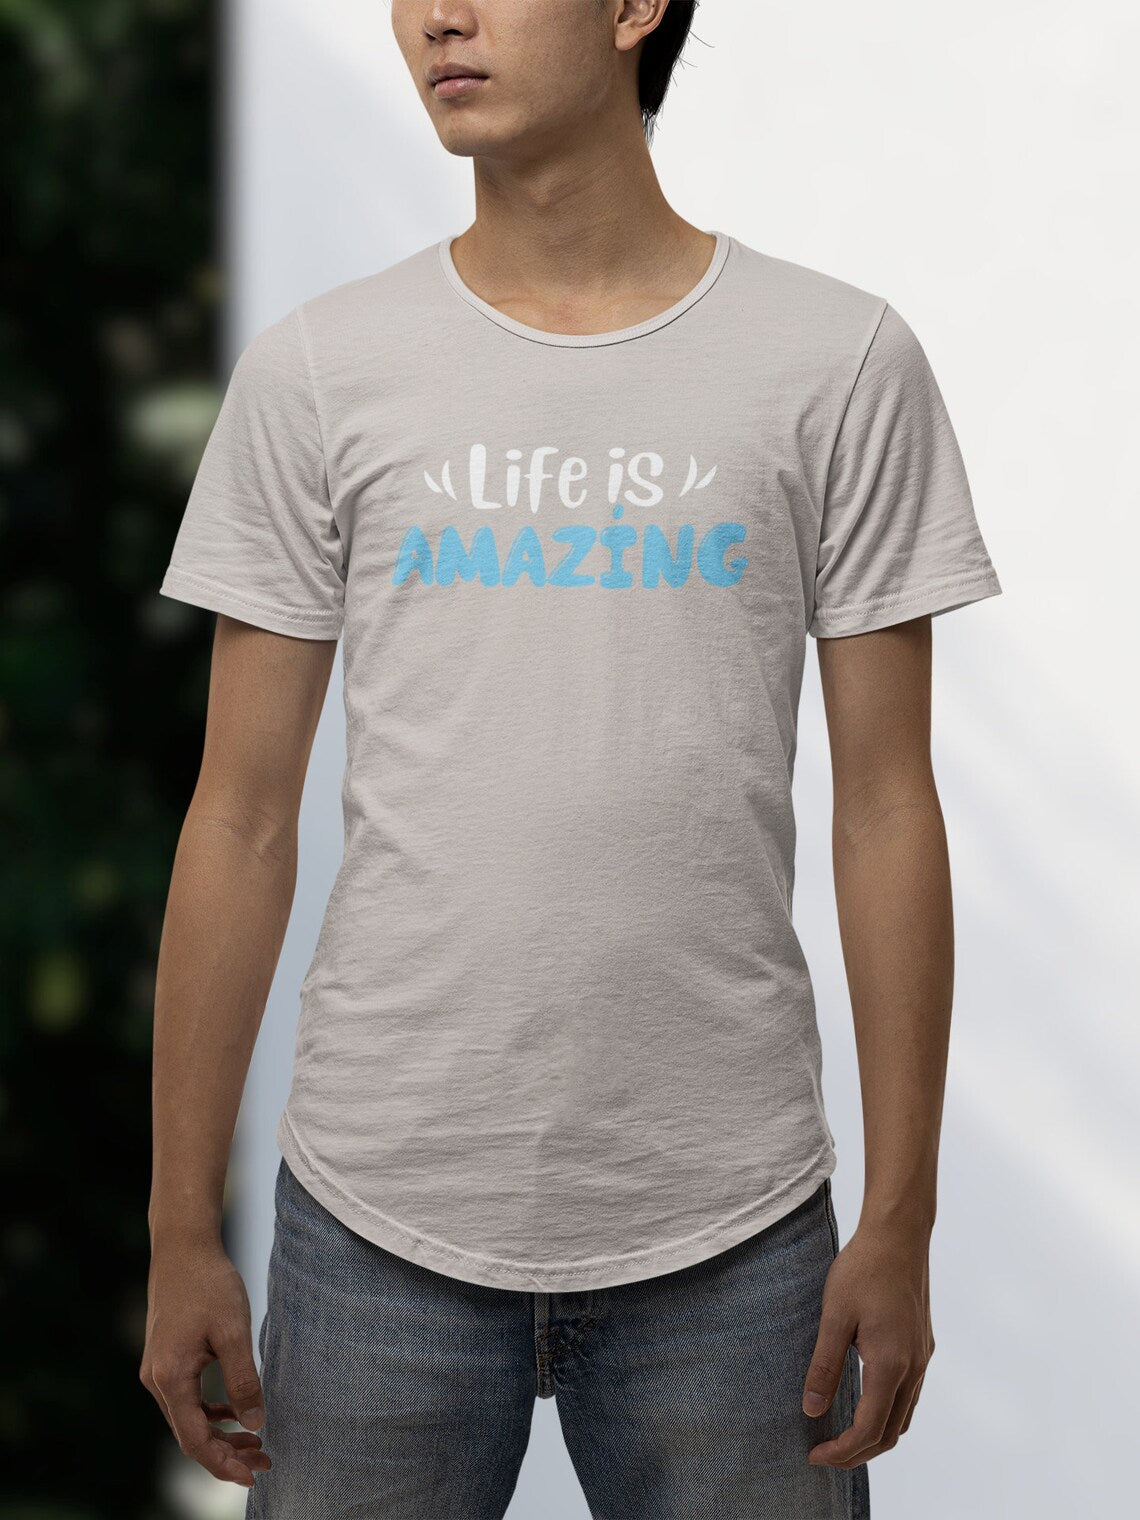 Life is Amazing Men's Jersey Curved Hem Tee, Amazing shirts, Inspirational shirts, Motivational Shirts, Positive shirts, Trendy tees